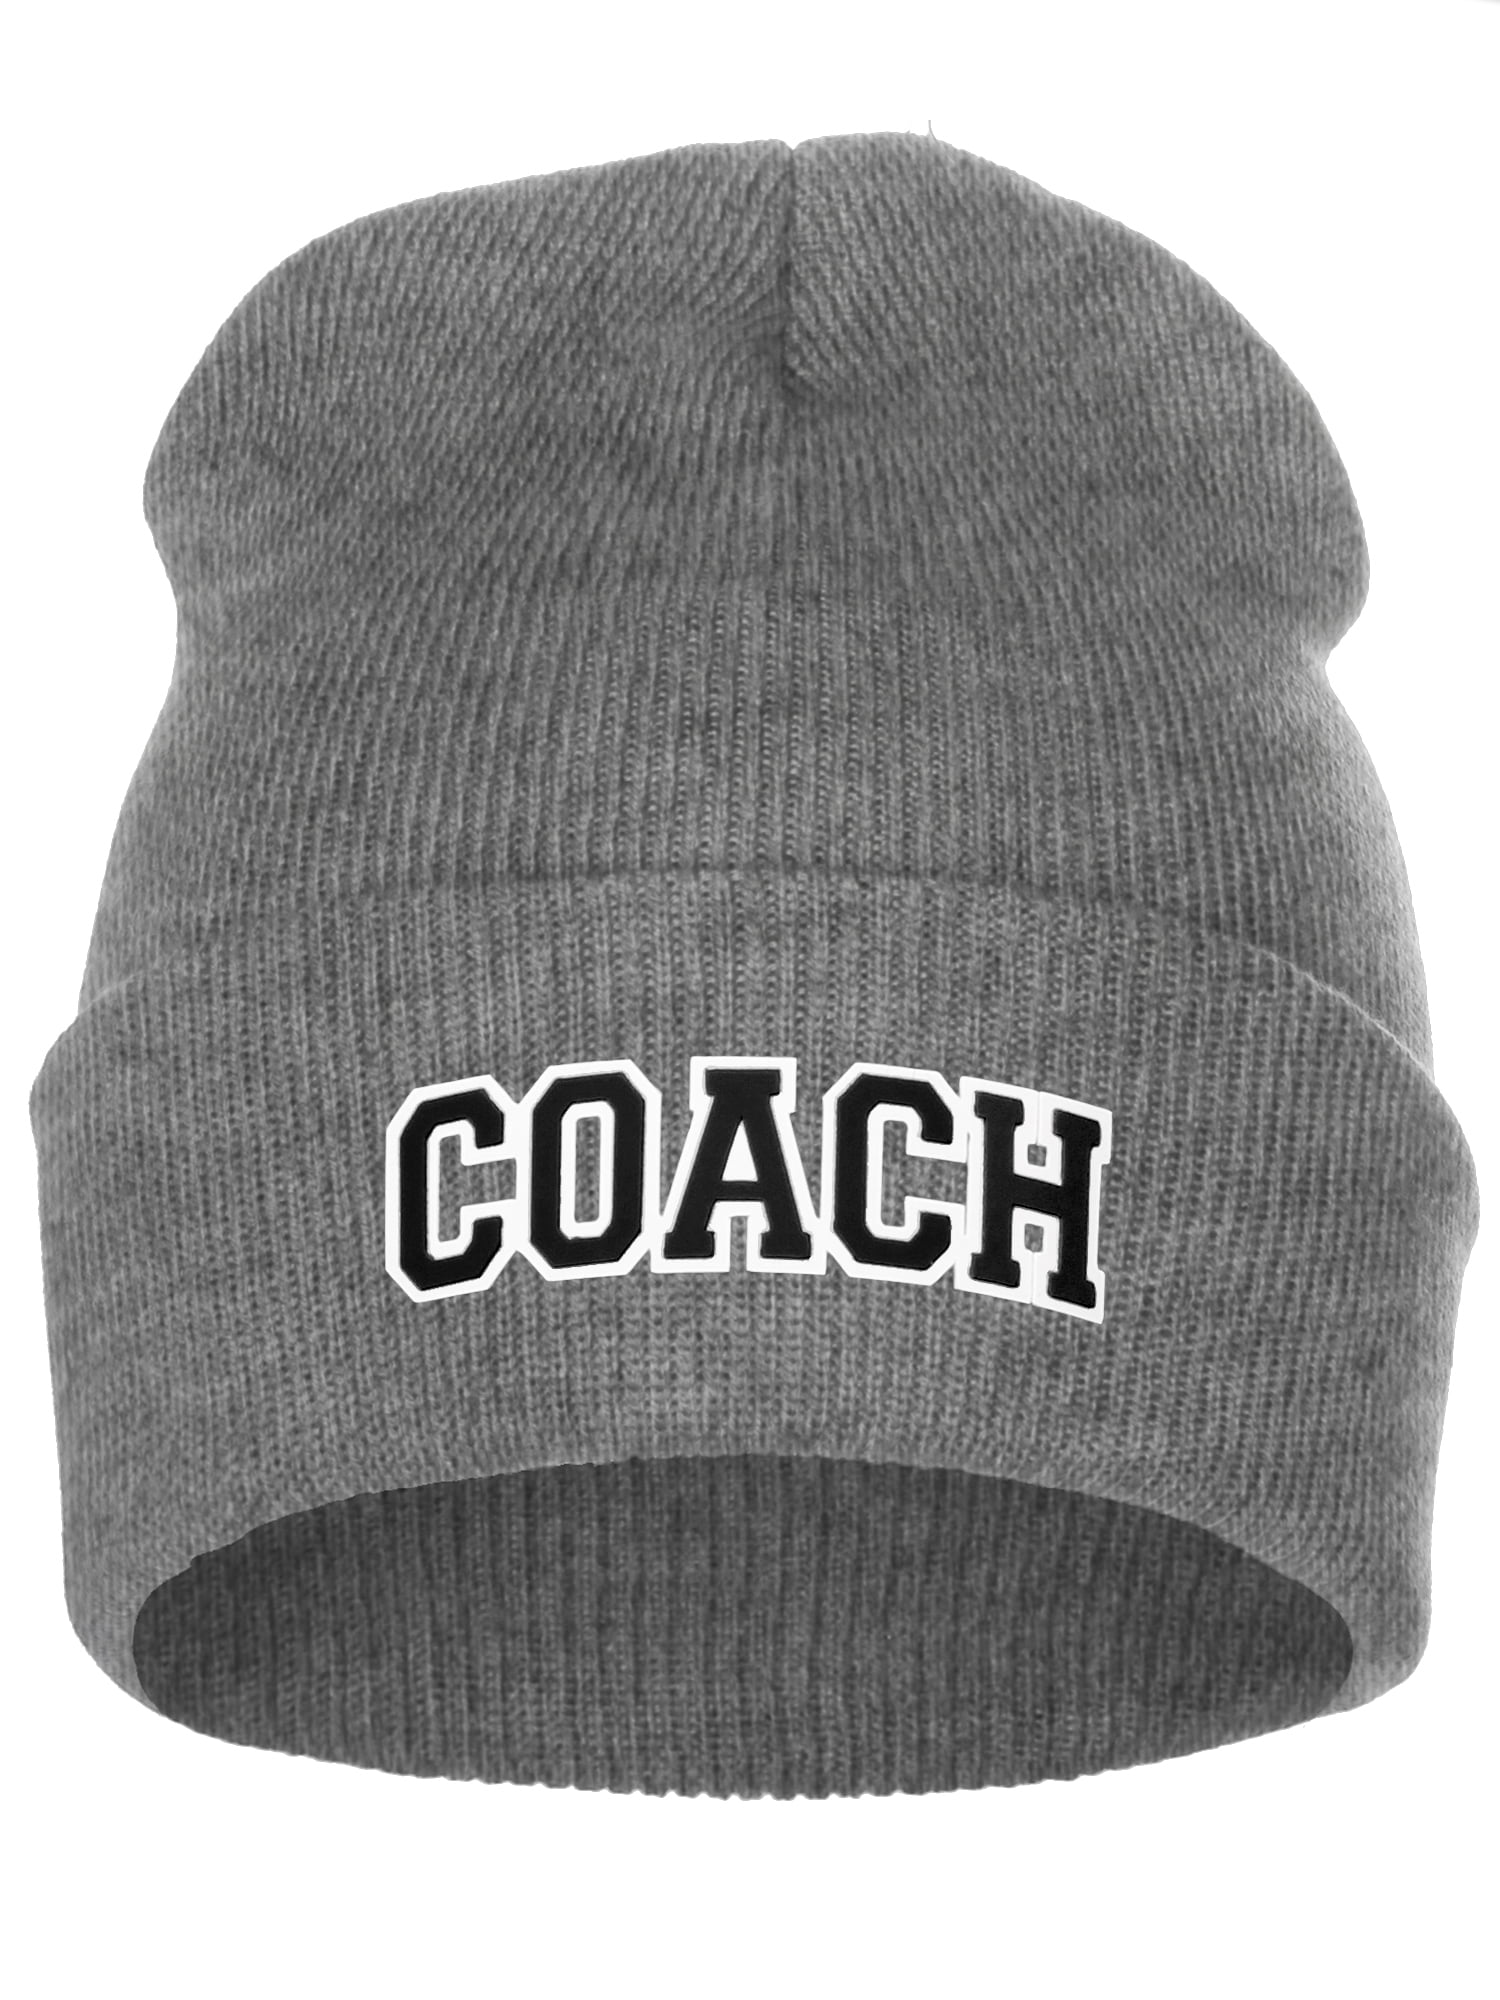 I&W Sports Team Coach Arch Letters Winter Knit Cuffed Beanie Hat, Black  Beanie White Nay